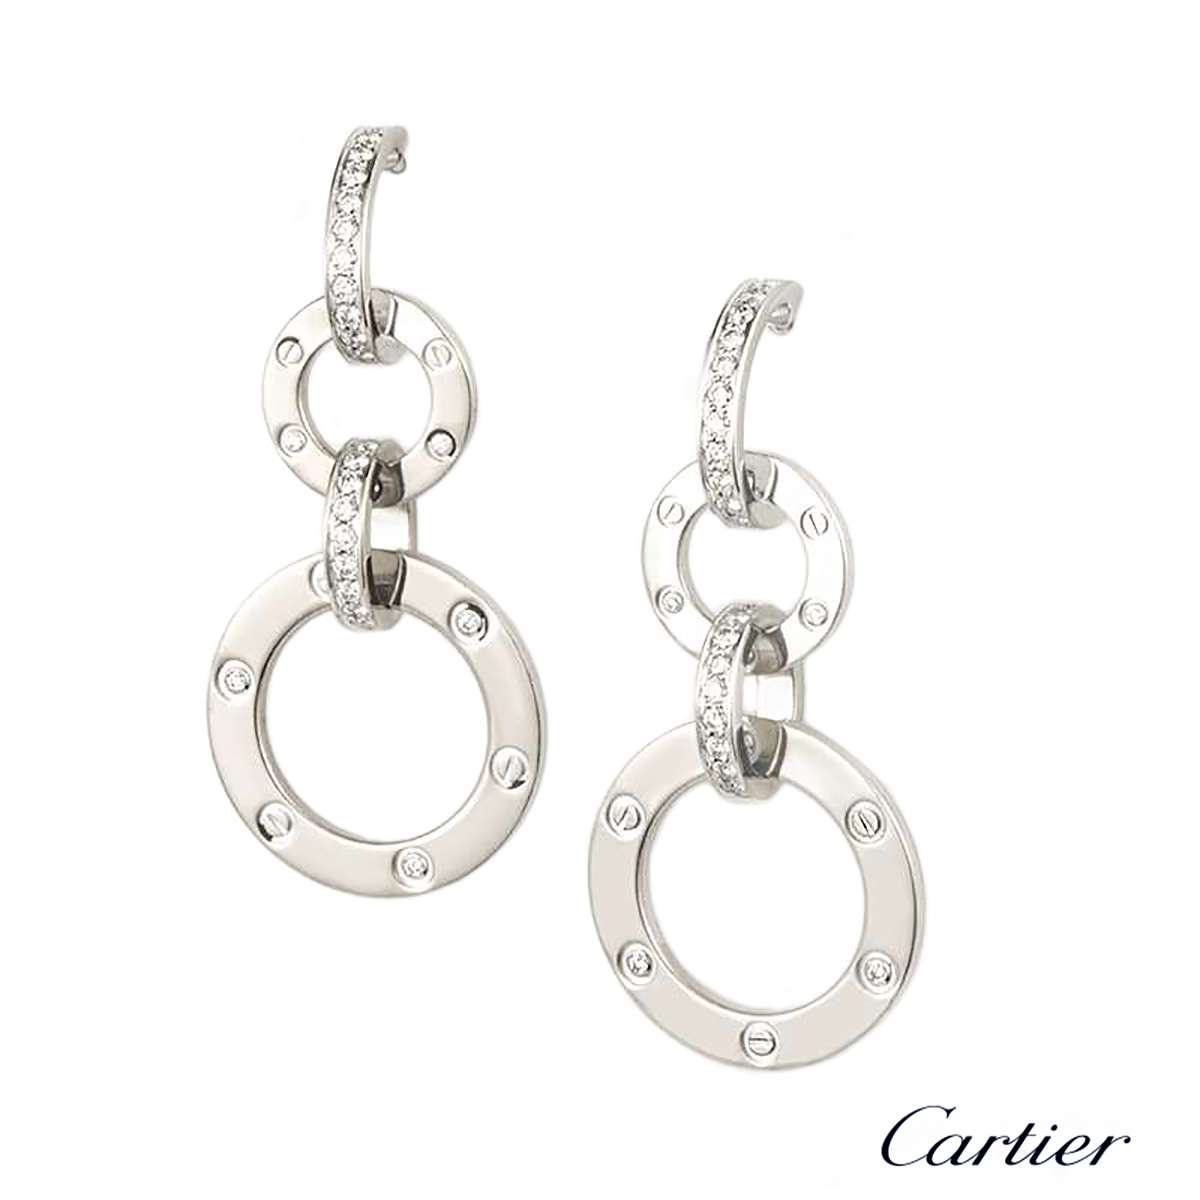 cartier love earrings with diamonds